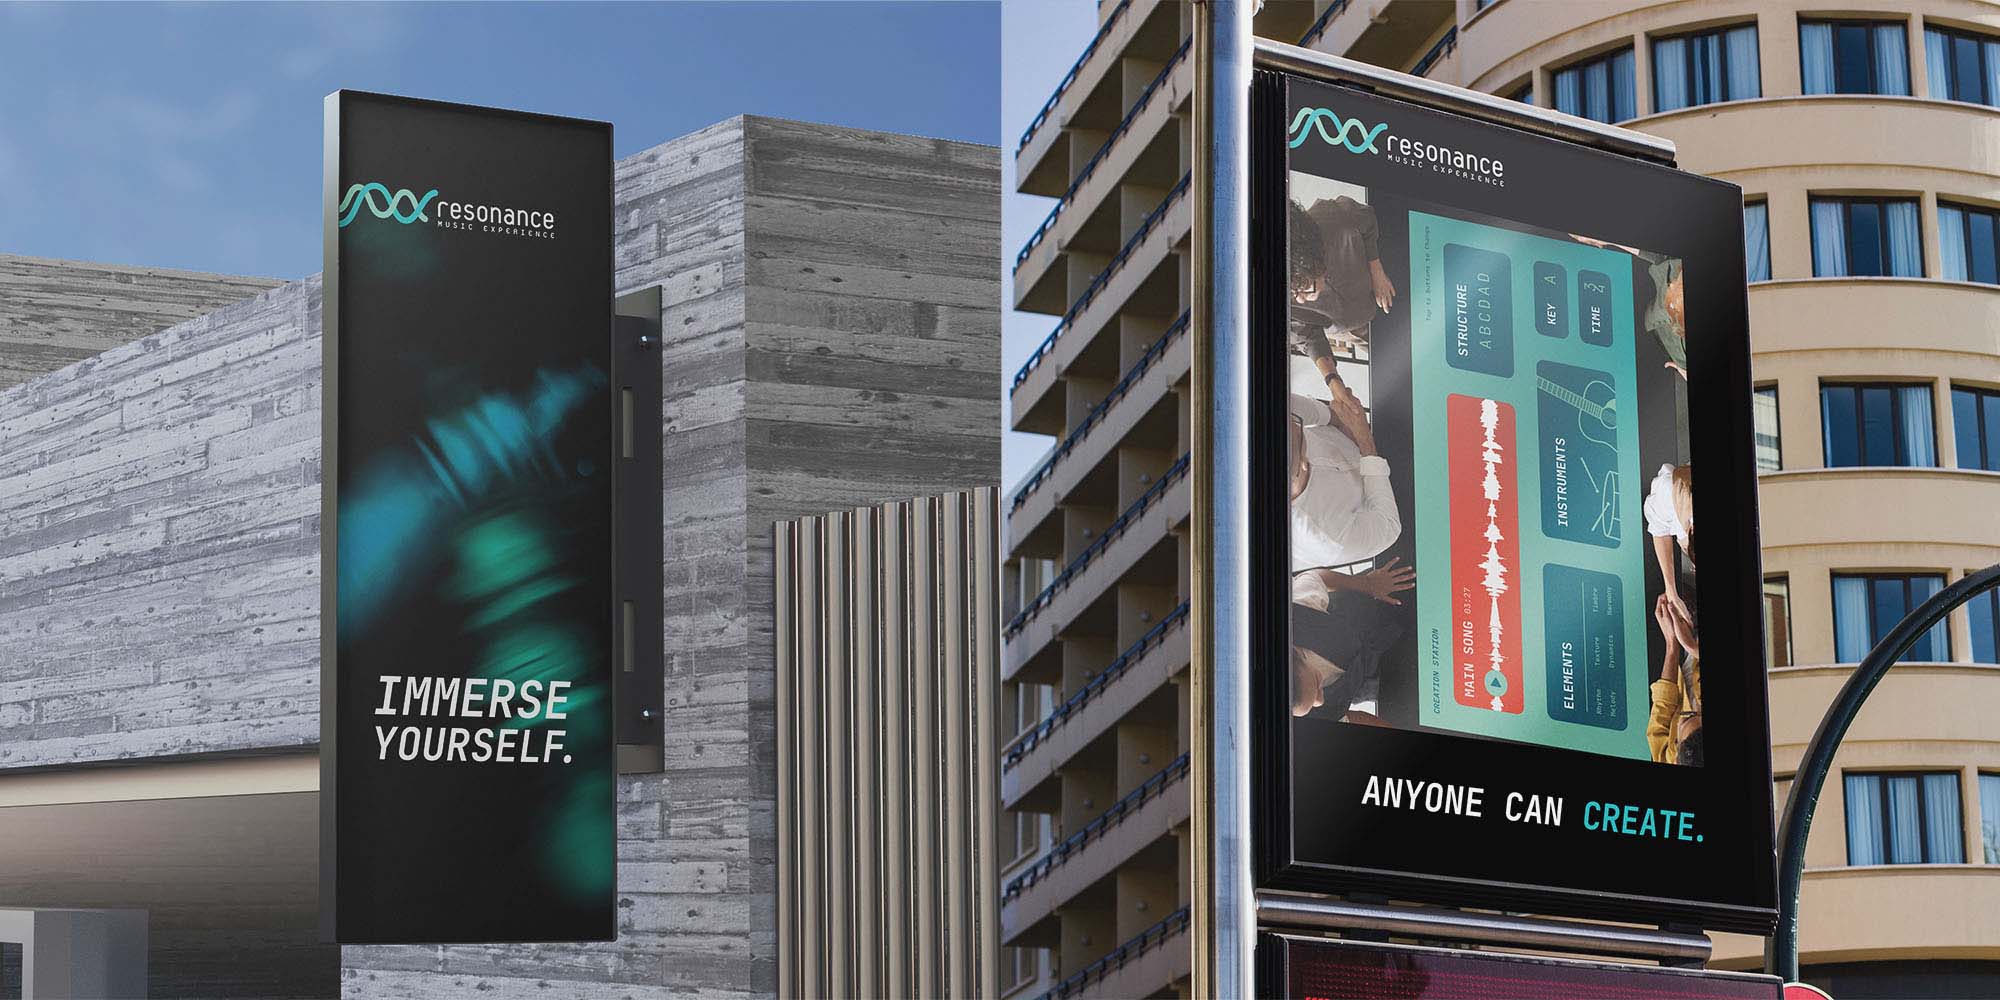 Resonance Building & Traffic Light Ad